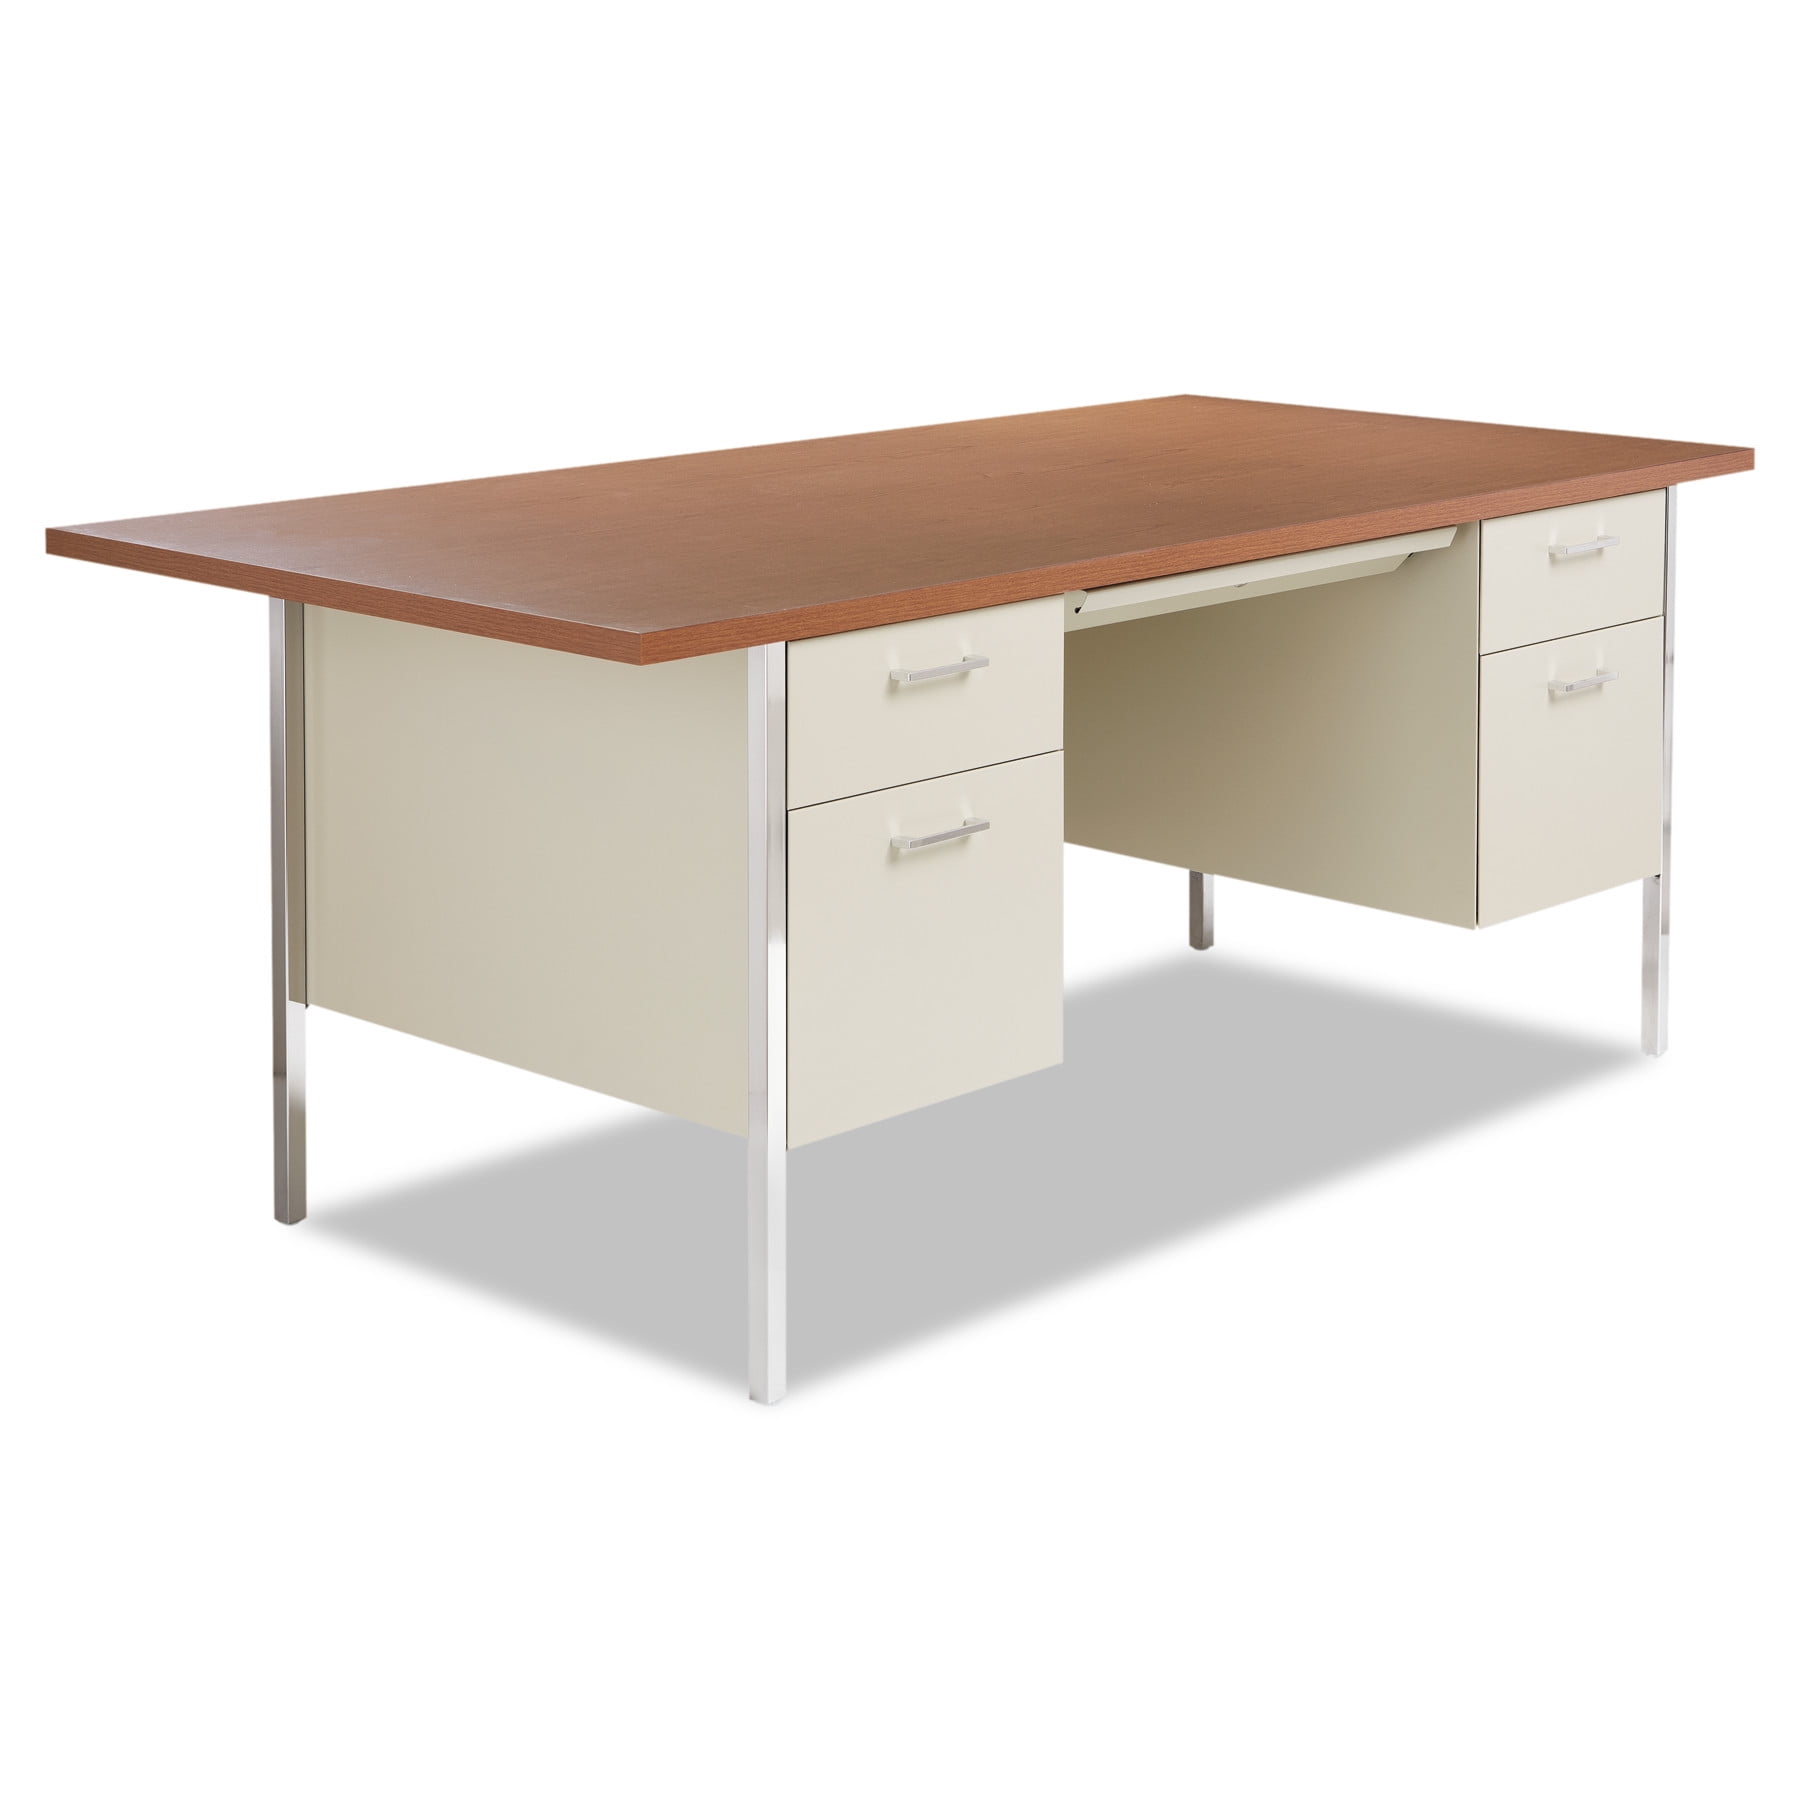 Alera Double Pedestal Steel Desk, Metal Desk, 72w x 36d x 29-1/2h,  Cherry/Putty 